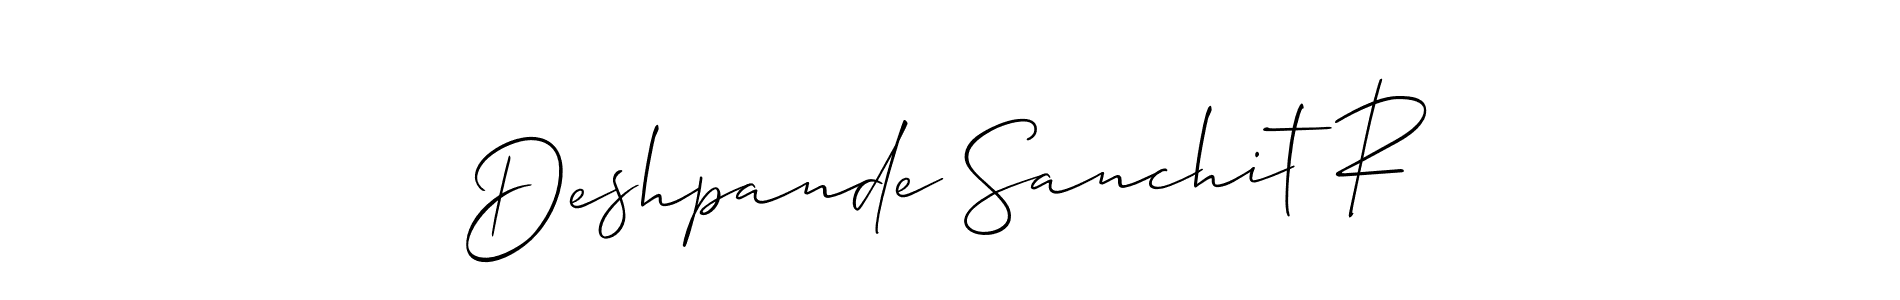 How to make Deshpande Sanchit R signature? Allison_Script is a professional autograph style. Create handwritten signature for Deshpande Sanchit R name. Deshpande Sanchit R signature style 2 images and pictures png